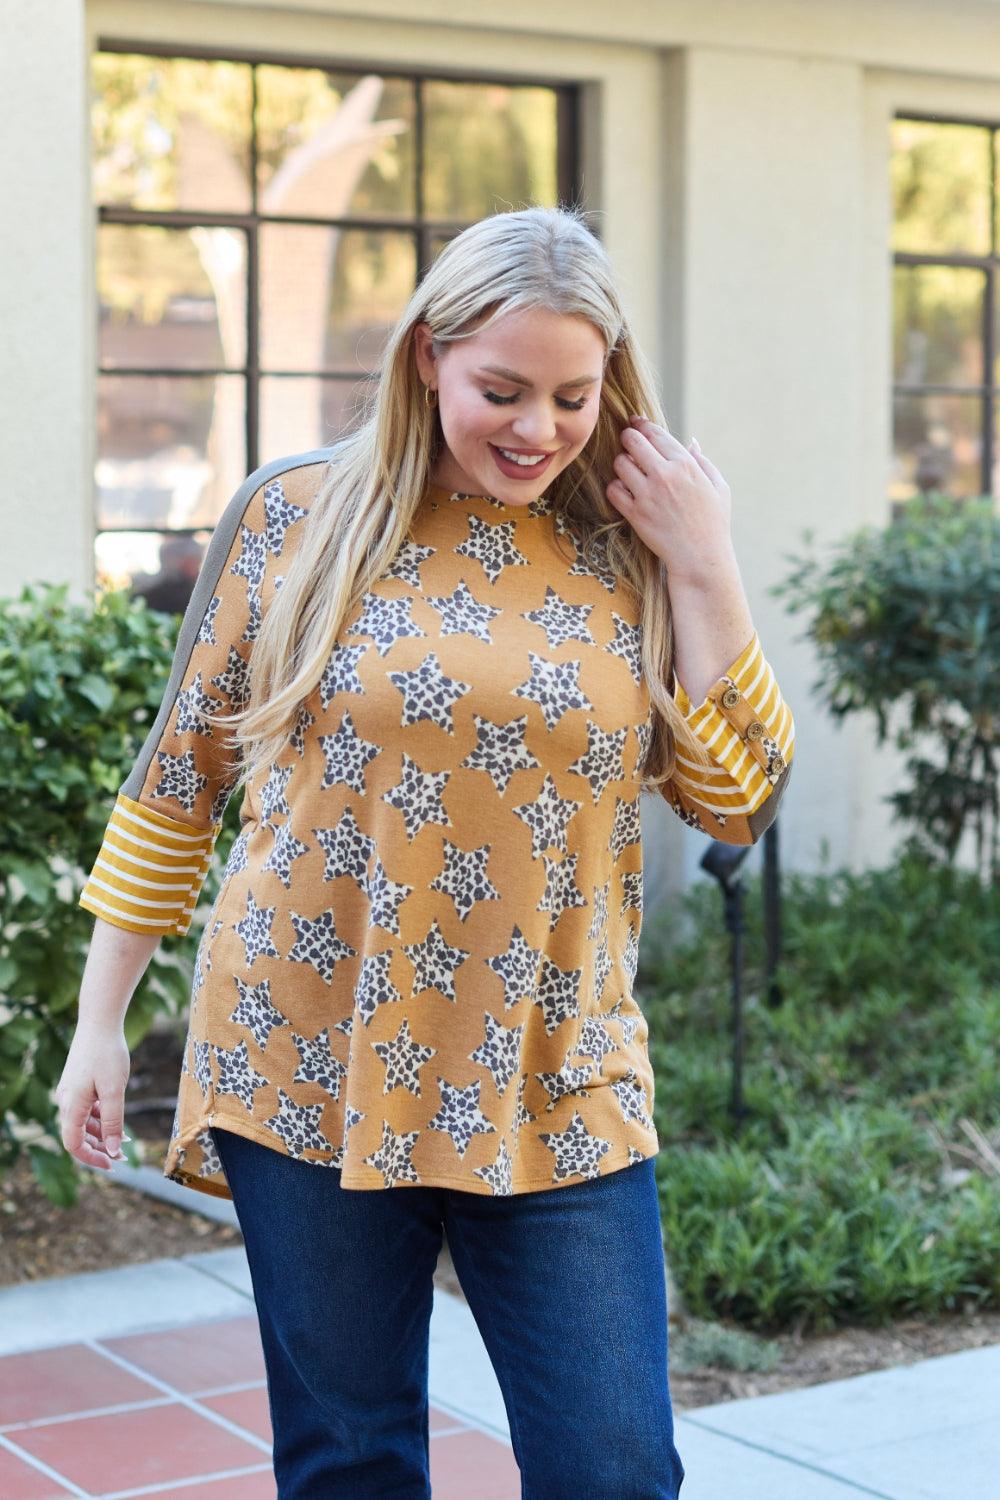 Women's Shirts Celeste Design Full Size Leopard Star Contrast Top